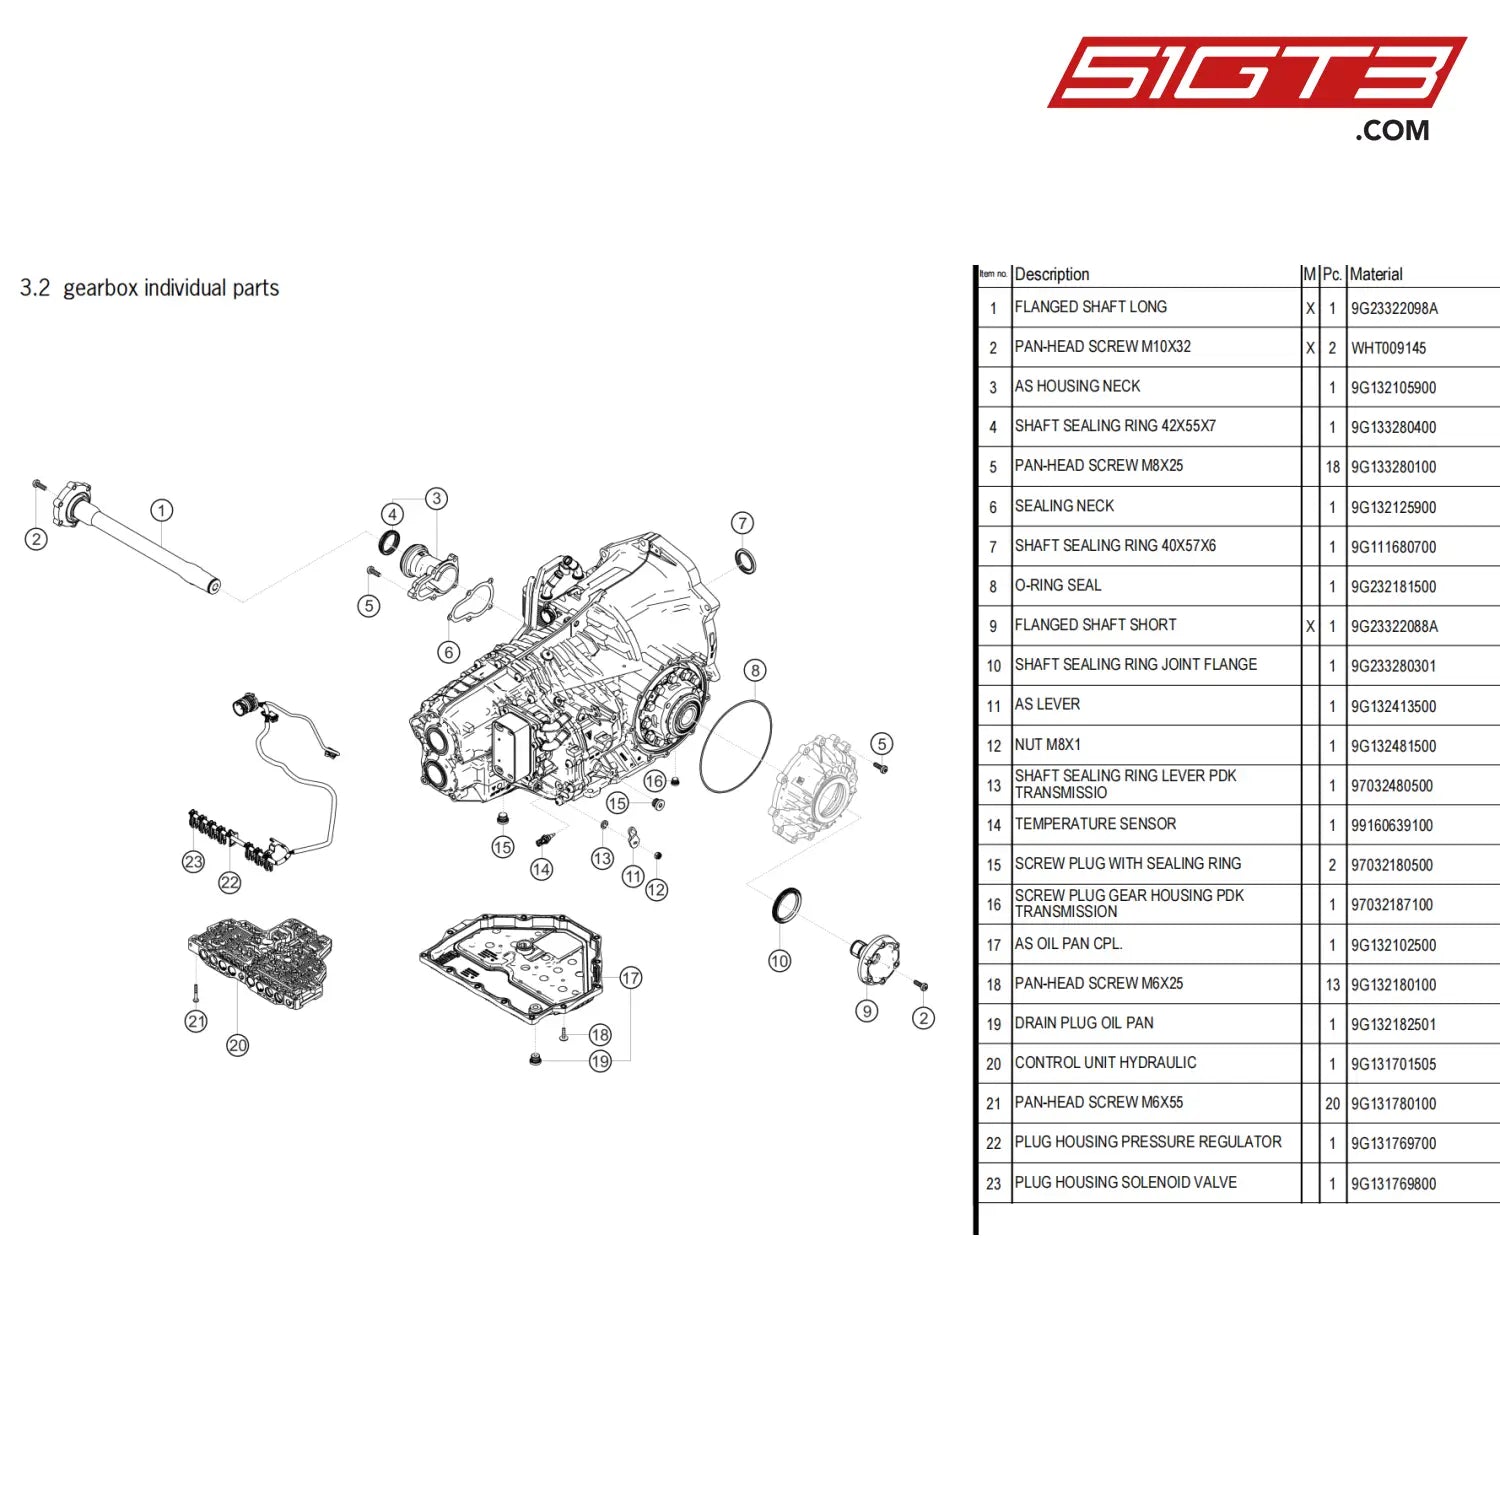 Drain Plug Oil Pan - 9G132182501 [Porsche 718 Cayman Gt4 Clubsport] Gearbox Individual Parts